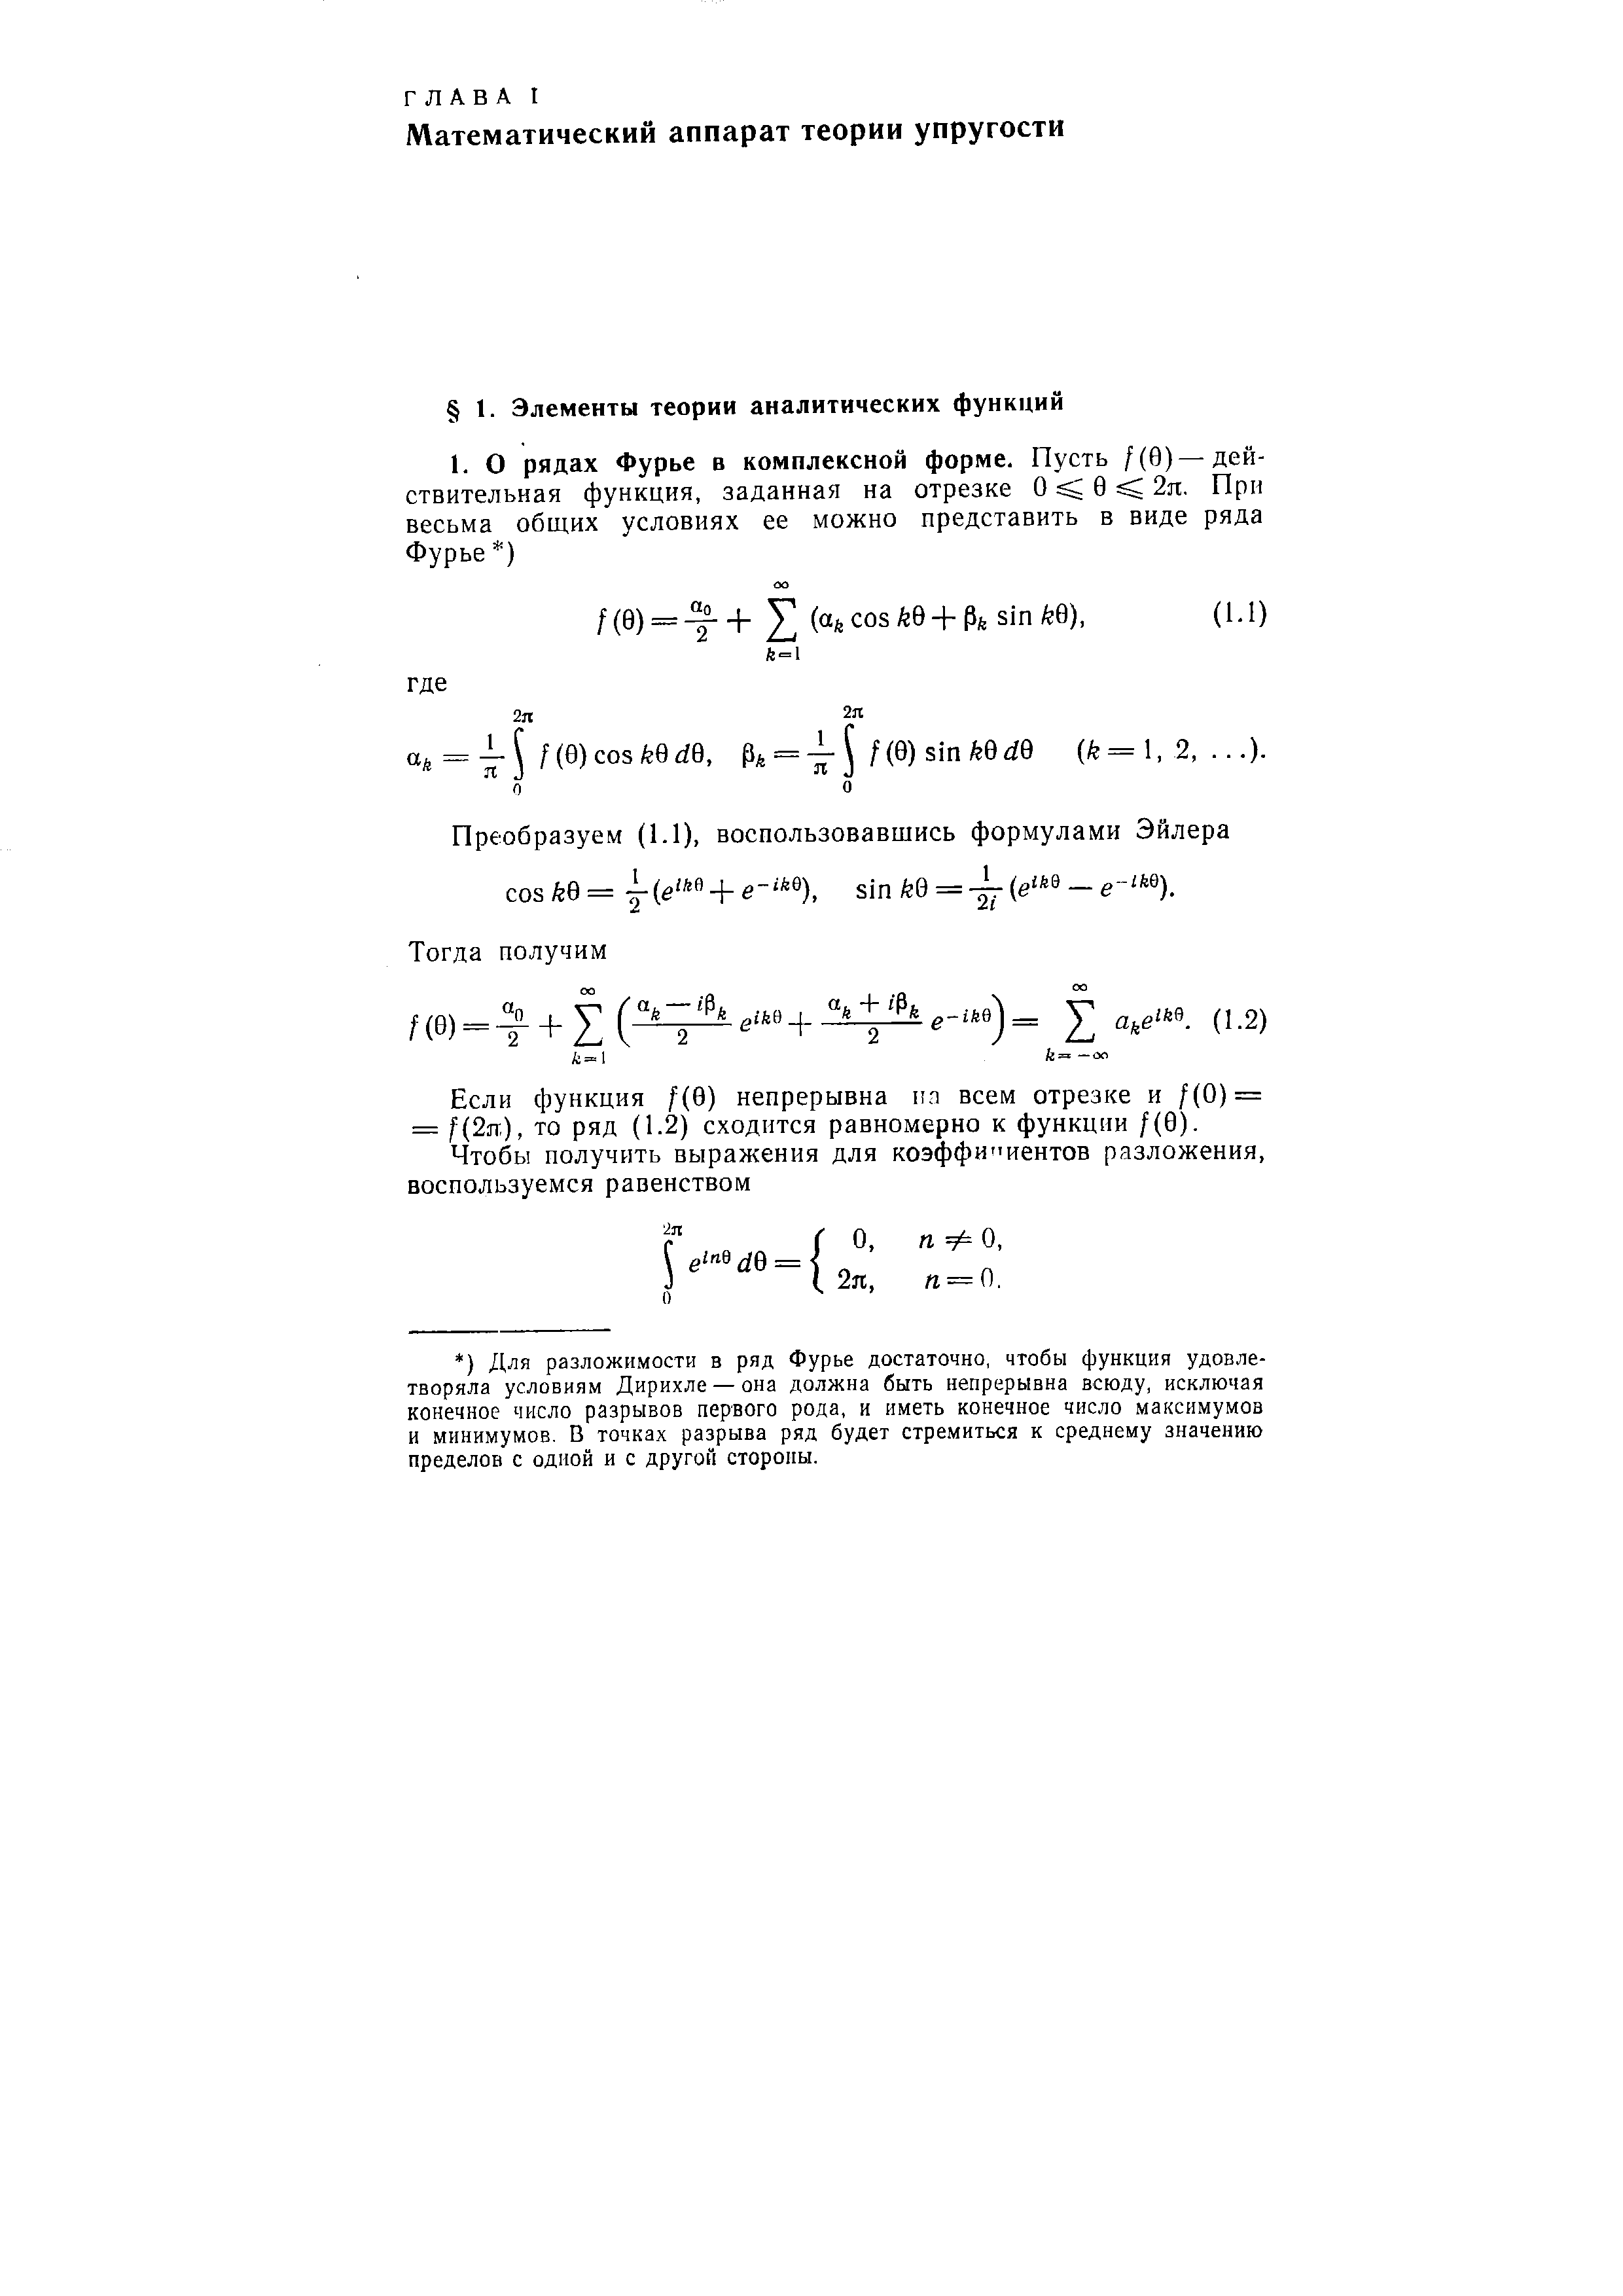 Преобразуем (1.1), воспользовавшись формулами Эйлера os fe0 = у (e + е ), sin б = (б — е ).
